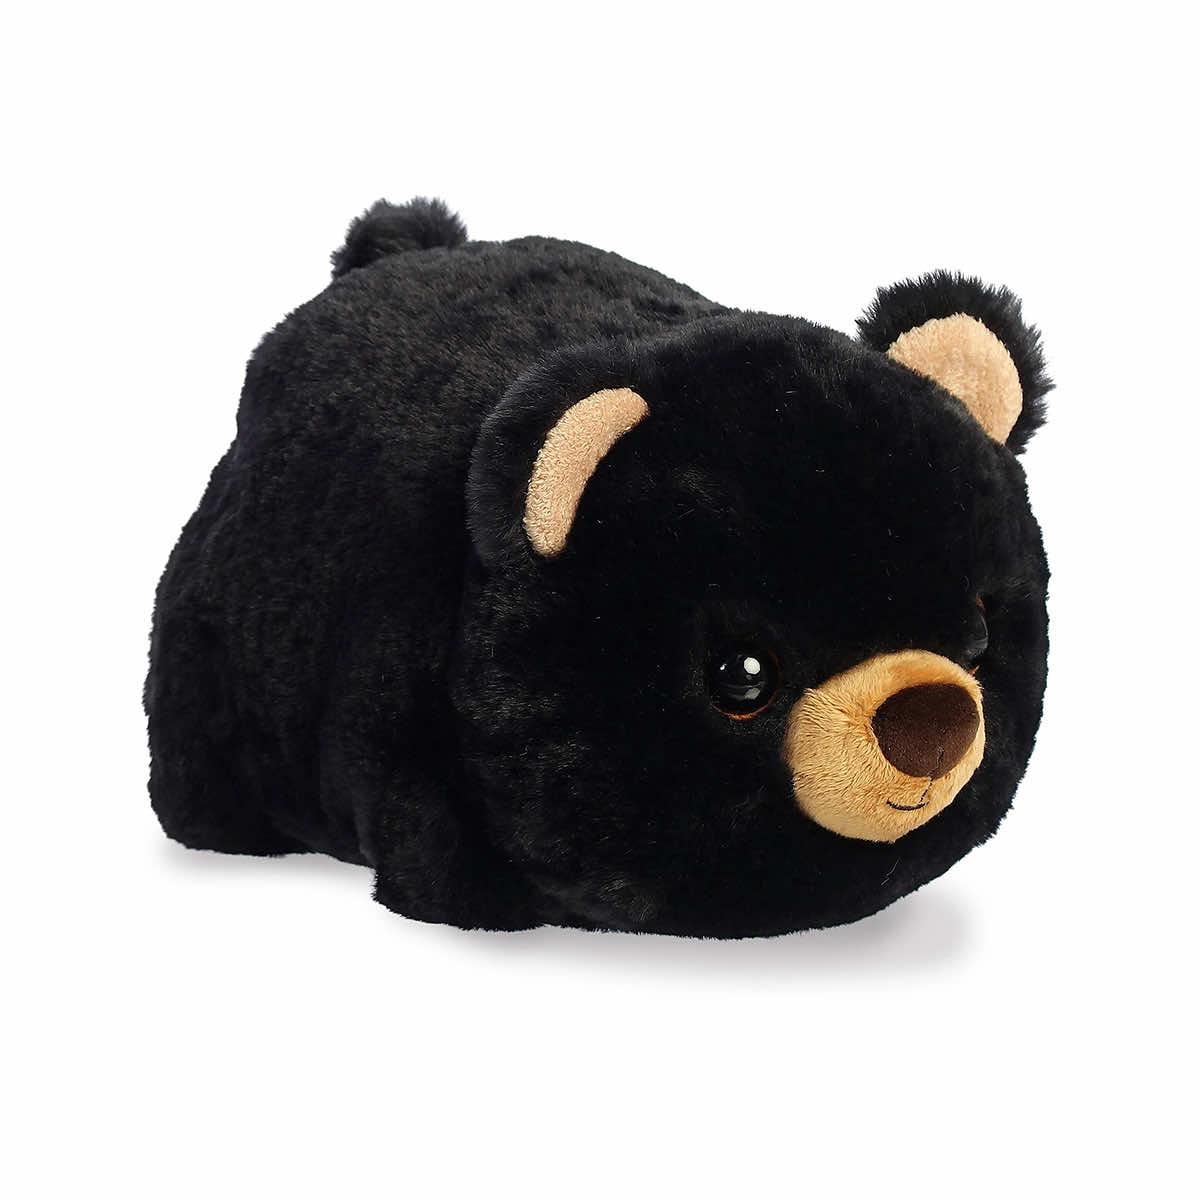  Spudster Briar Black Bear Plush Toy